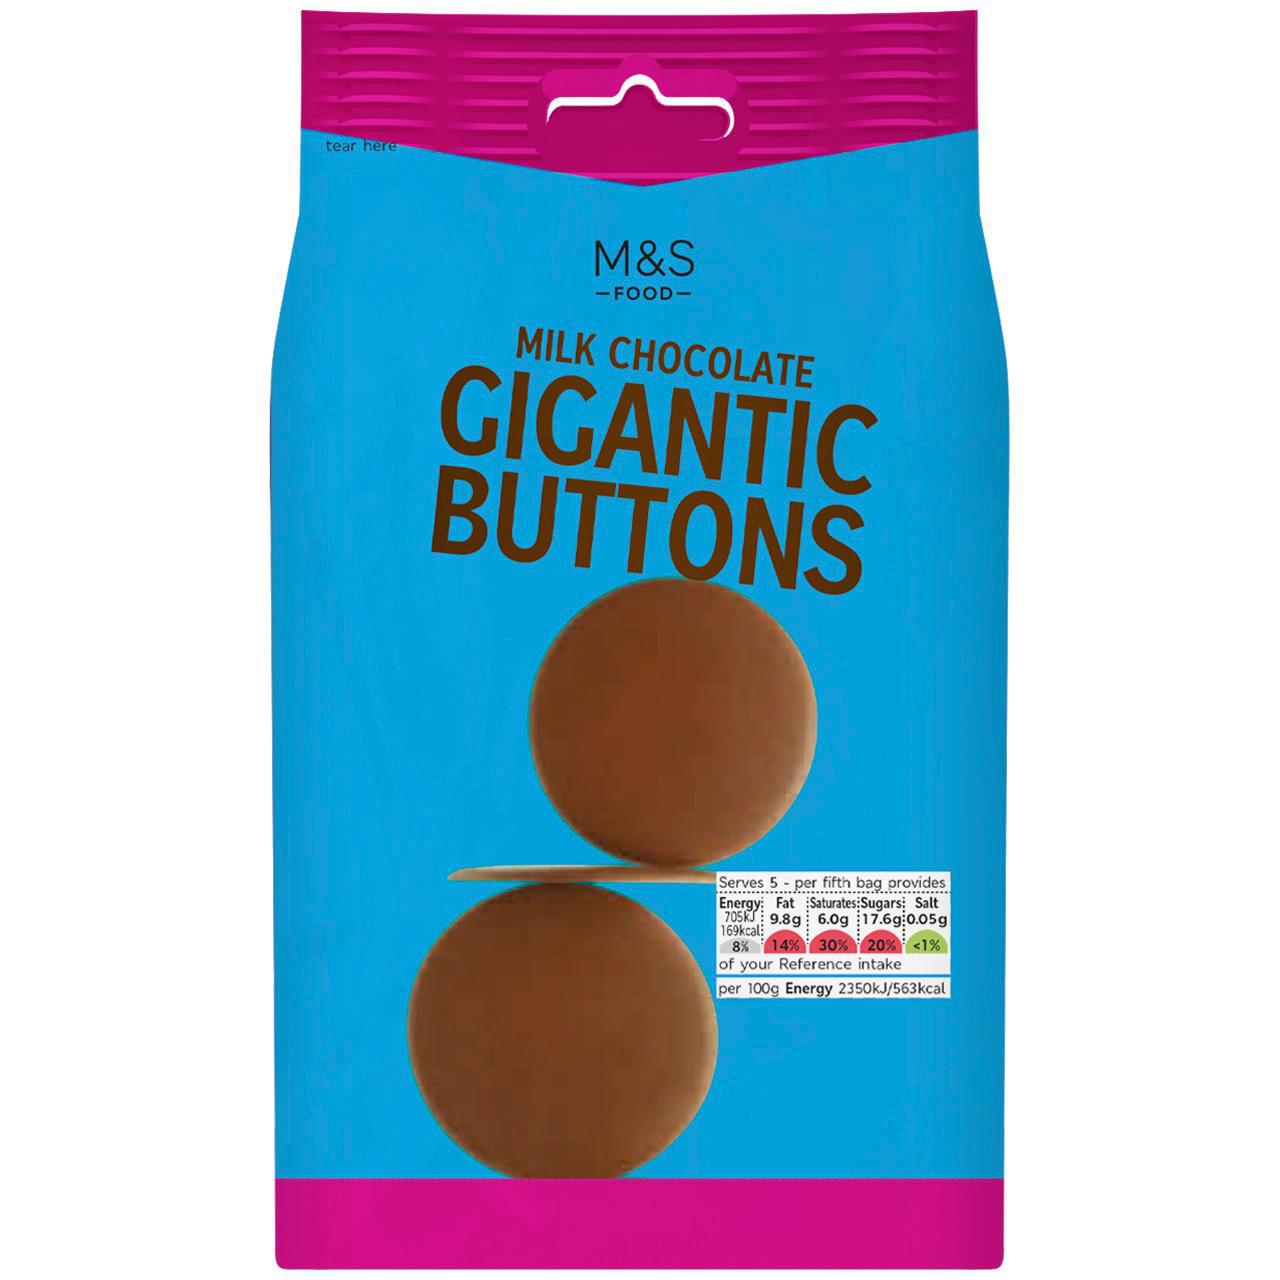 M&S Milk Chocolate Gigantic Buttons 150g